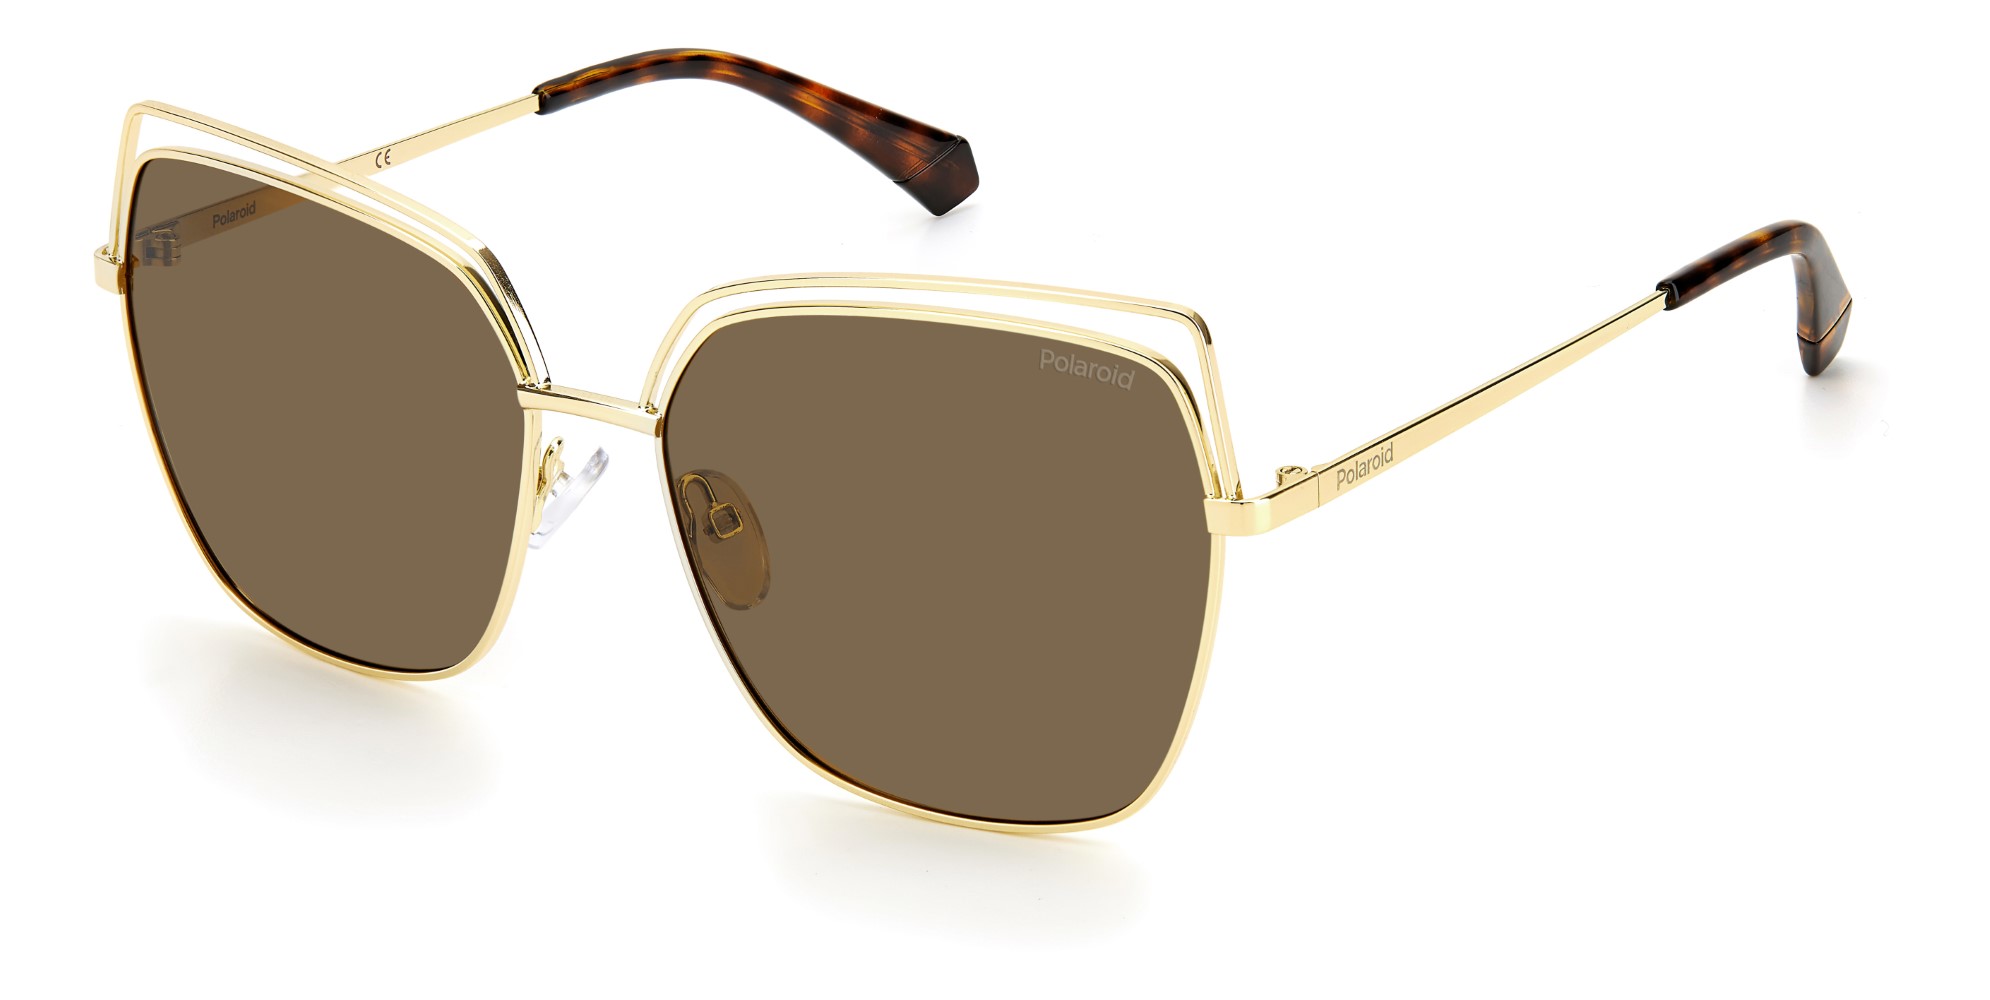 Polariod Sunglasses Women 4093/S J5G/Sp59 Pz